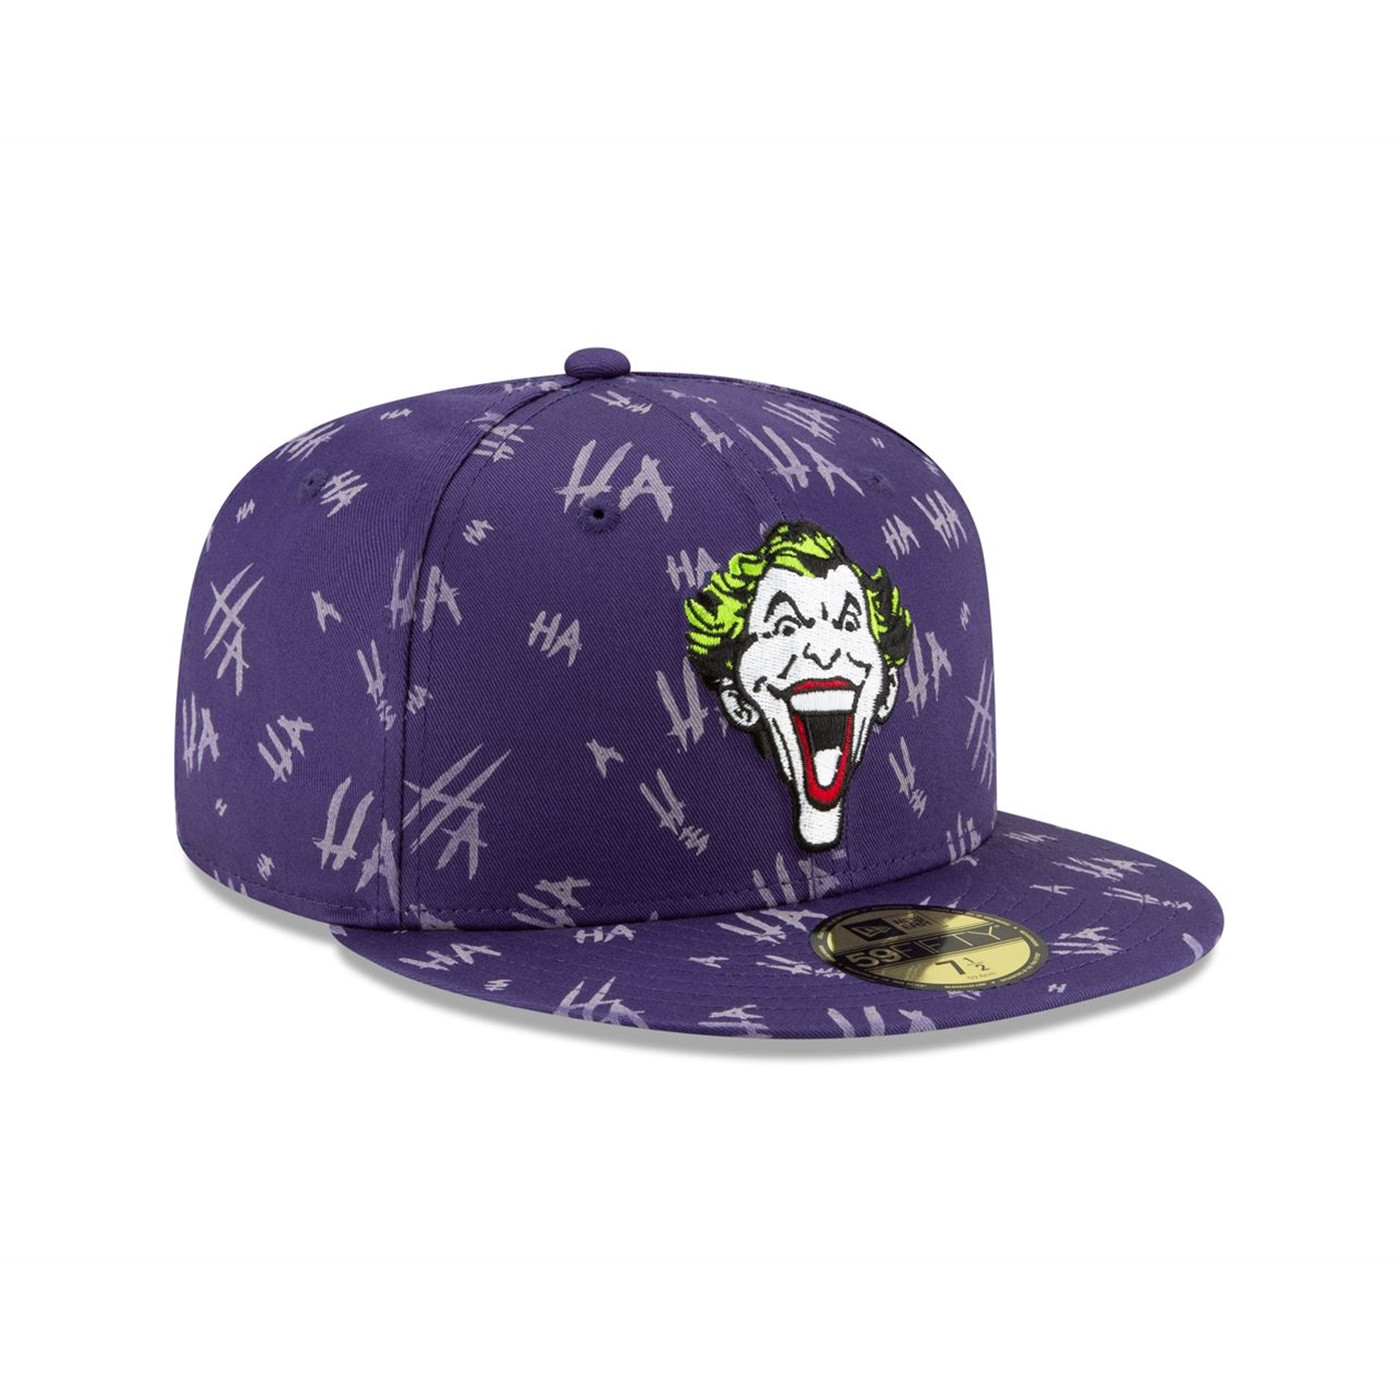 joker fitted hat